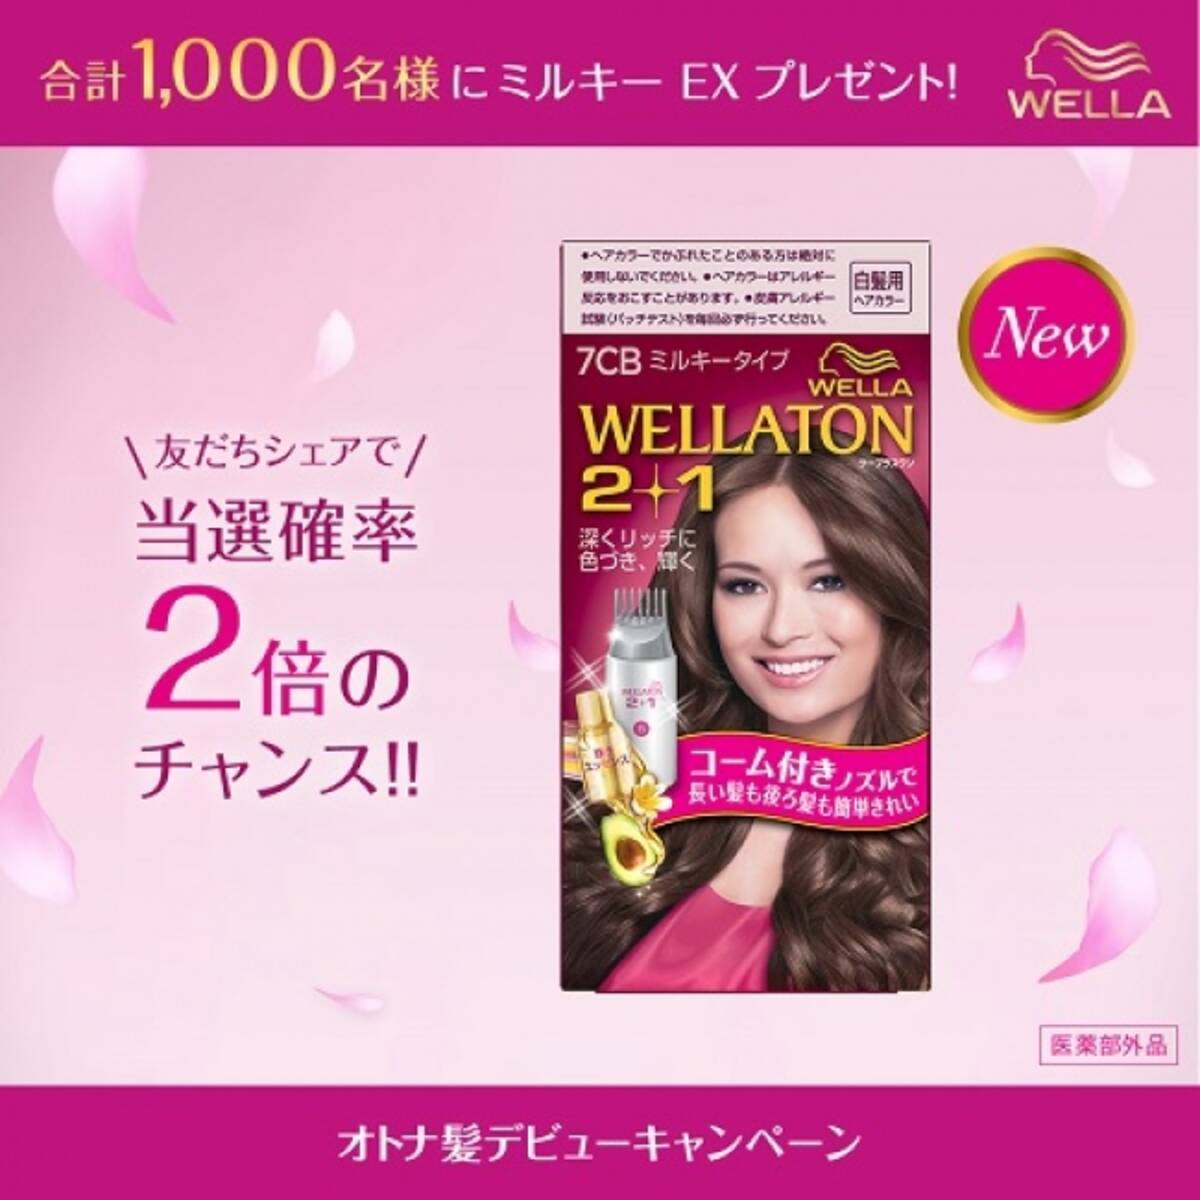 Wella Japan Line公式アカウントにてプレゼントキャンペーン開始 年3月16日 エキサイトニュース